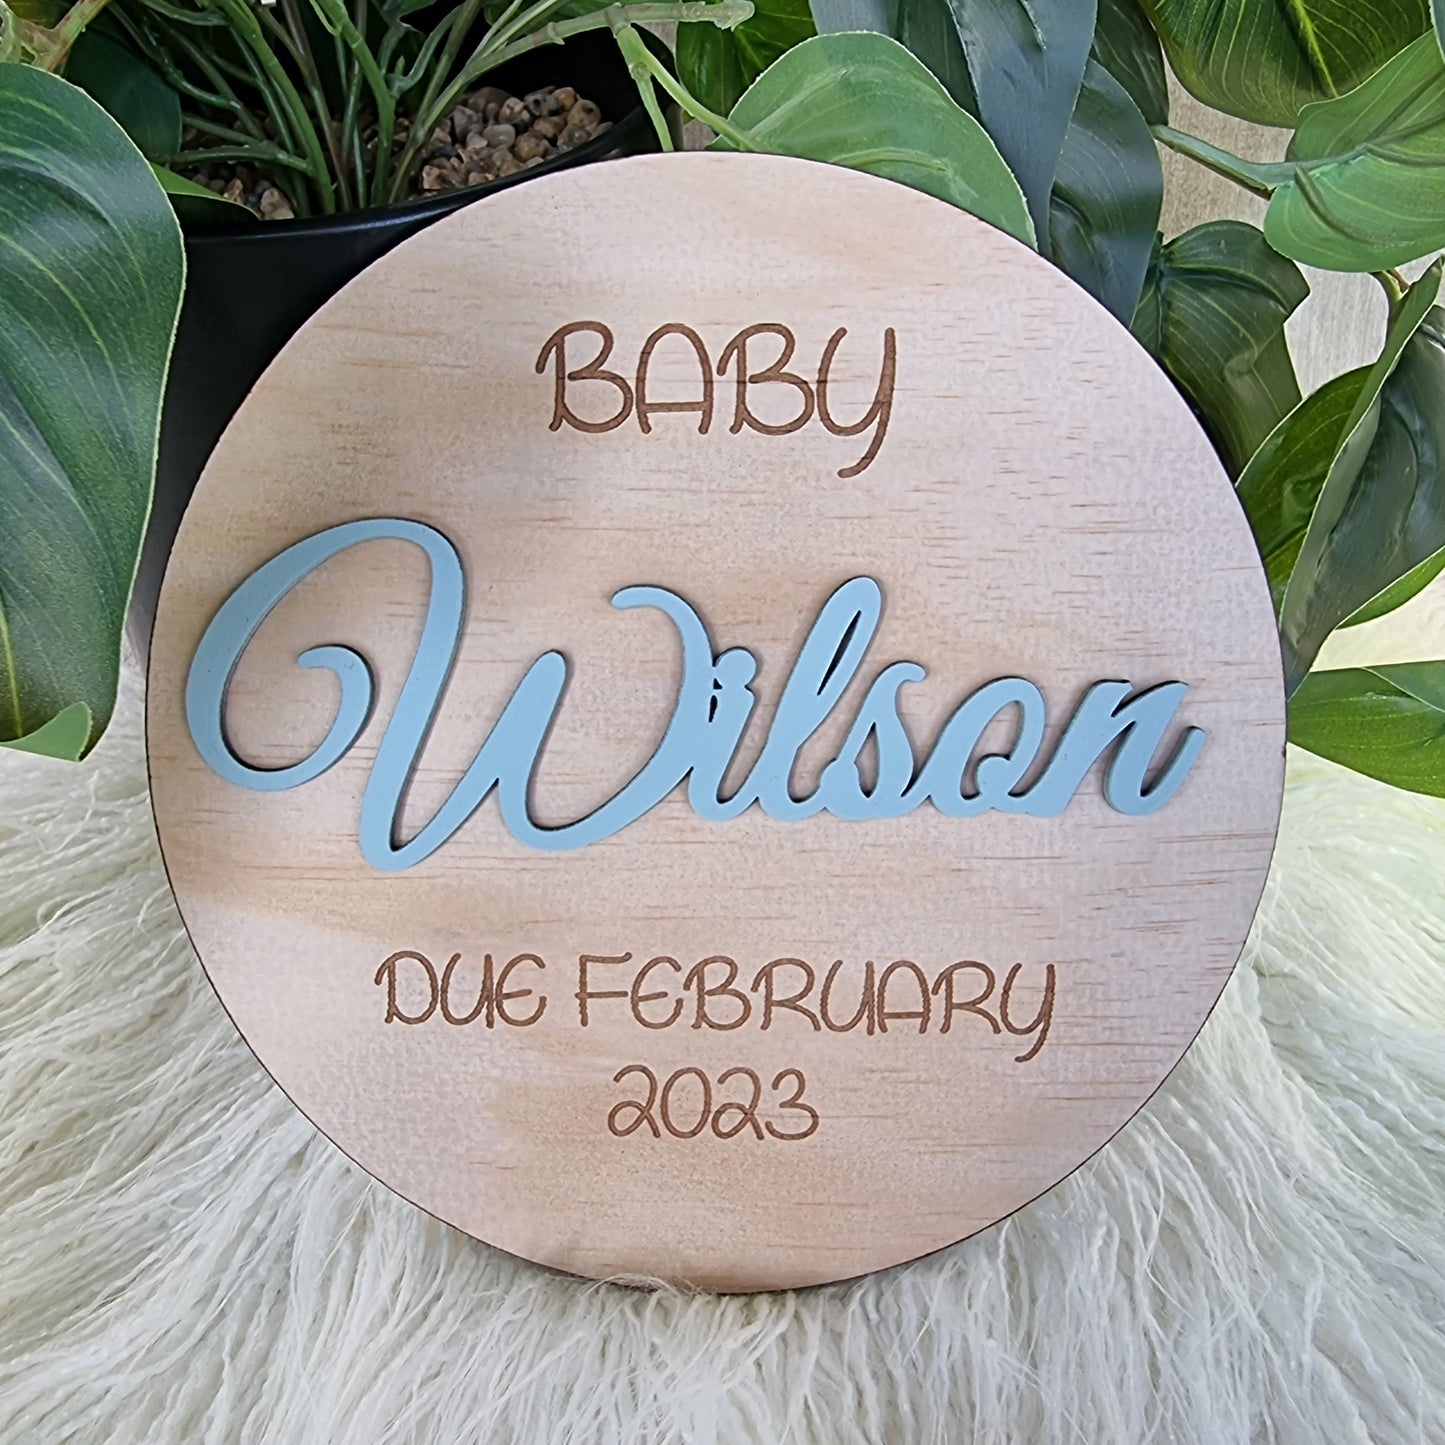 Wooden Pregnancy Announcement Disc - Baby Announcement Plaque - Baby Due